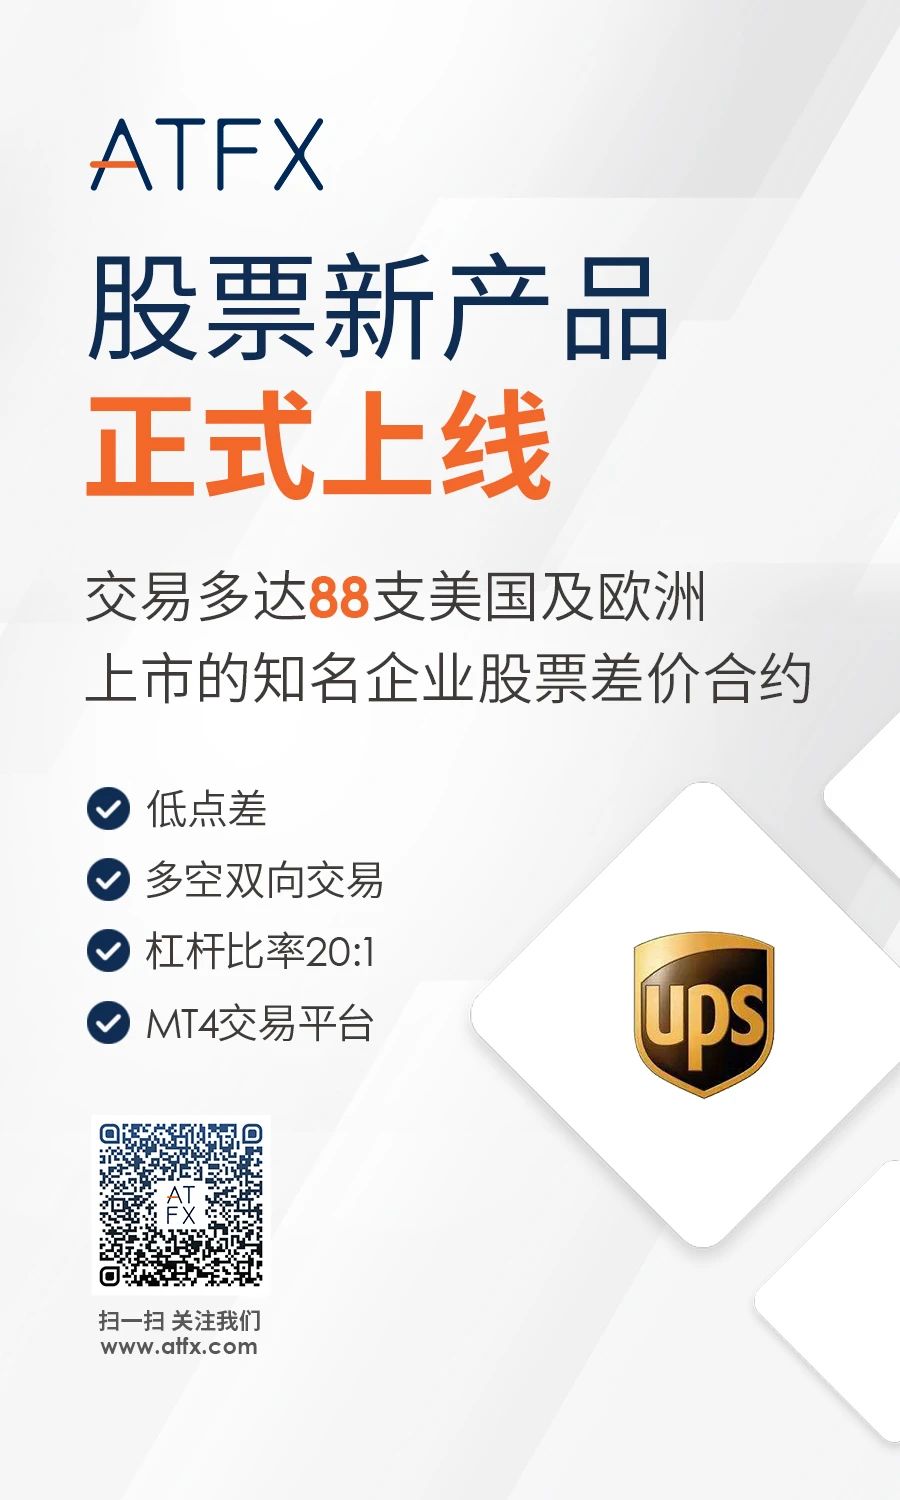 ATFX新产品再添加“新成员”，UPS公司正式上线！